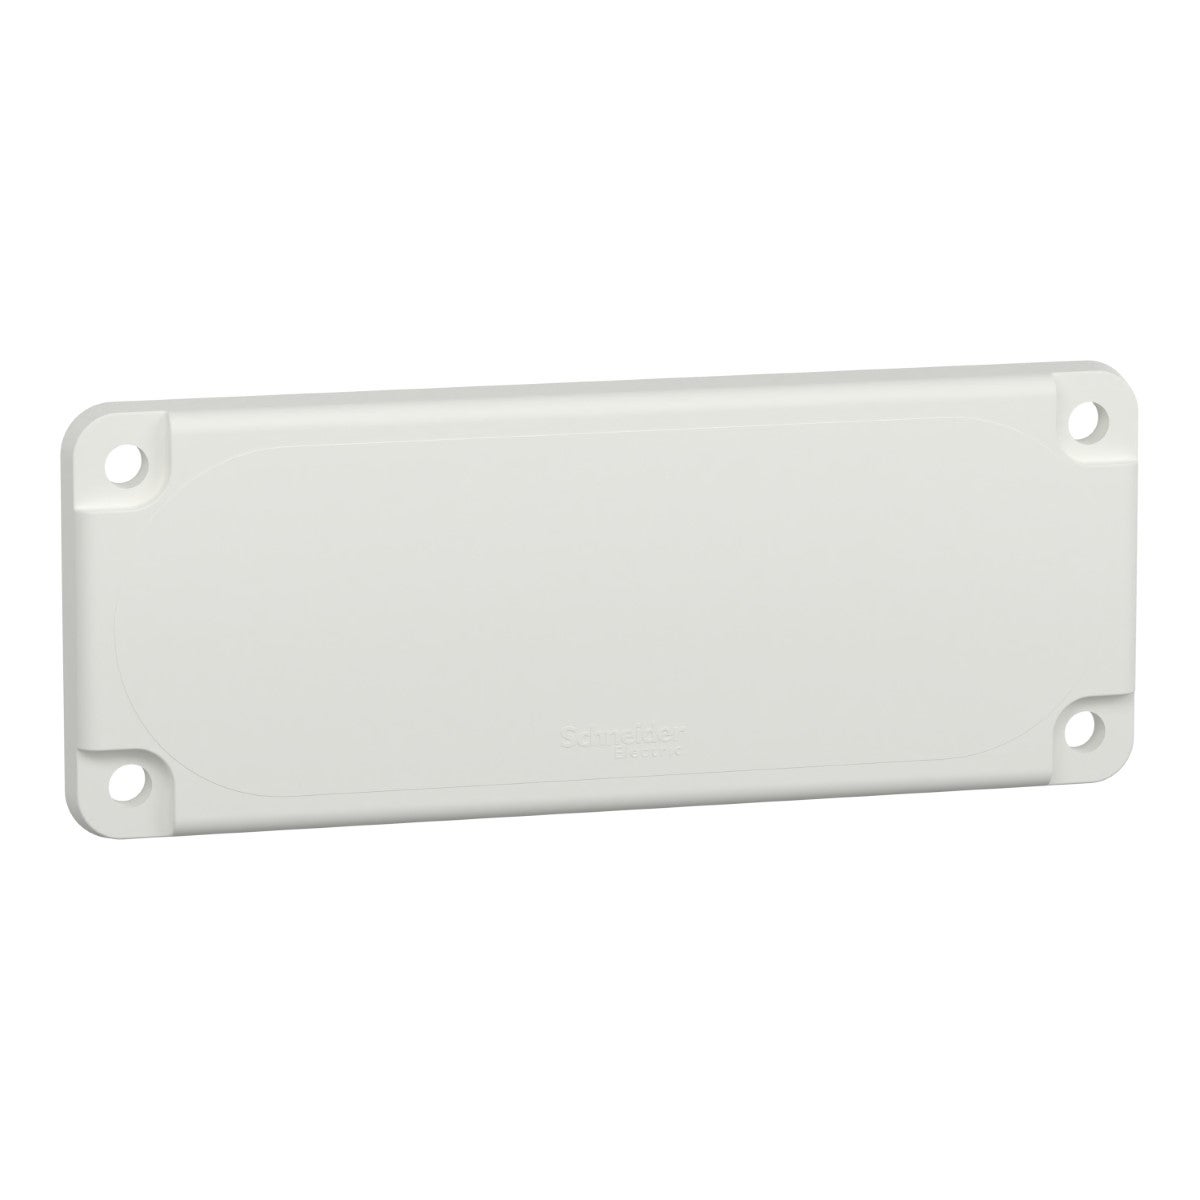 Gland plate, PrismaSeT G, Plain type,plastic, for enclosure W800mm, D600mm, IP55, white, RAL 9003